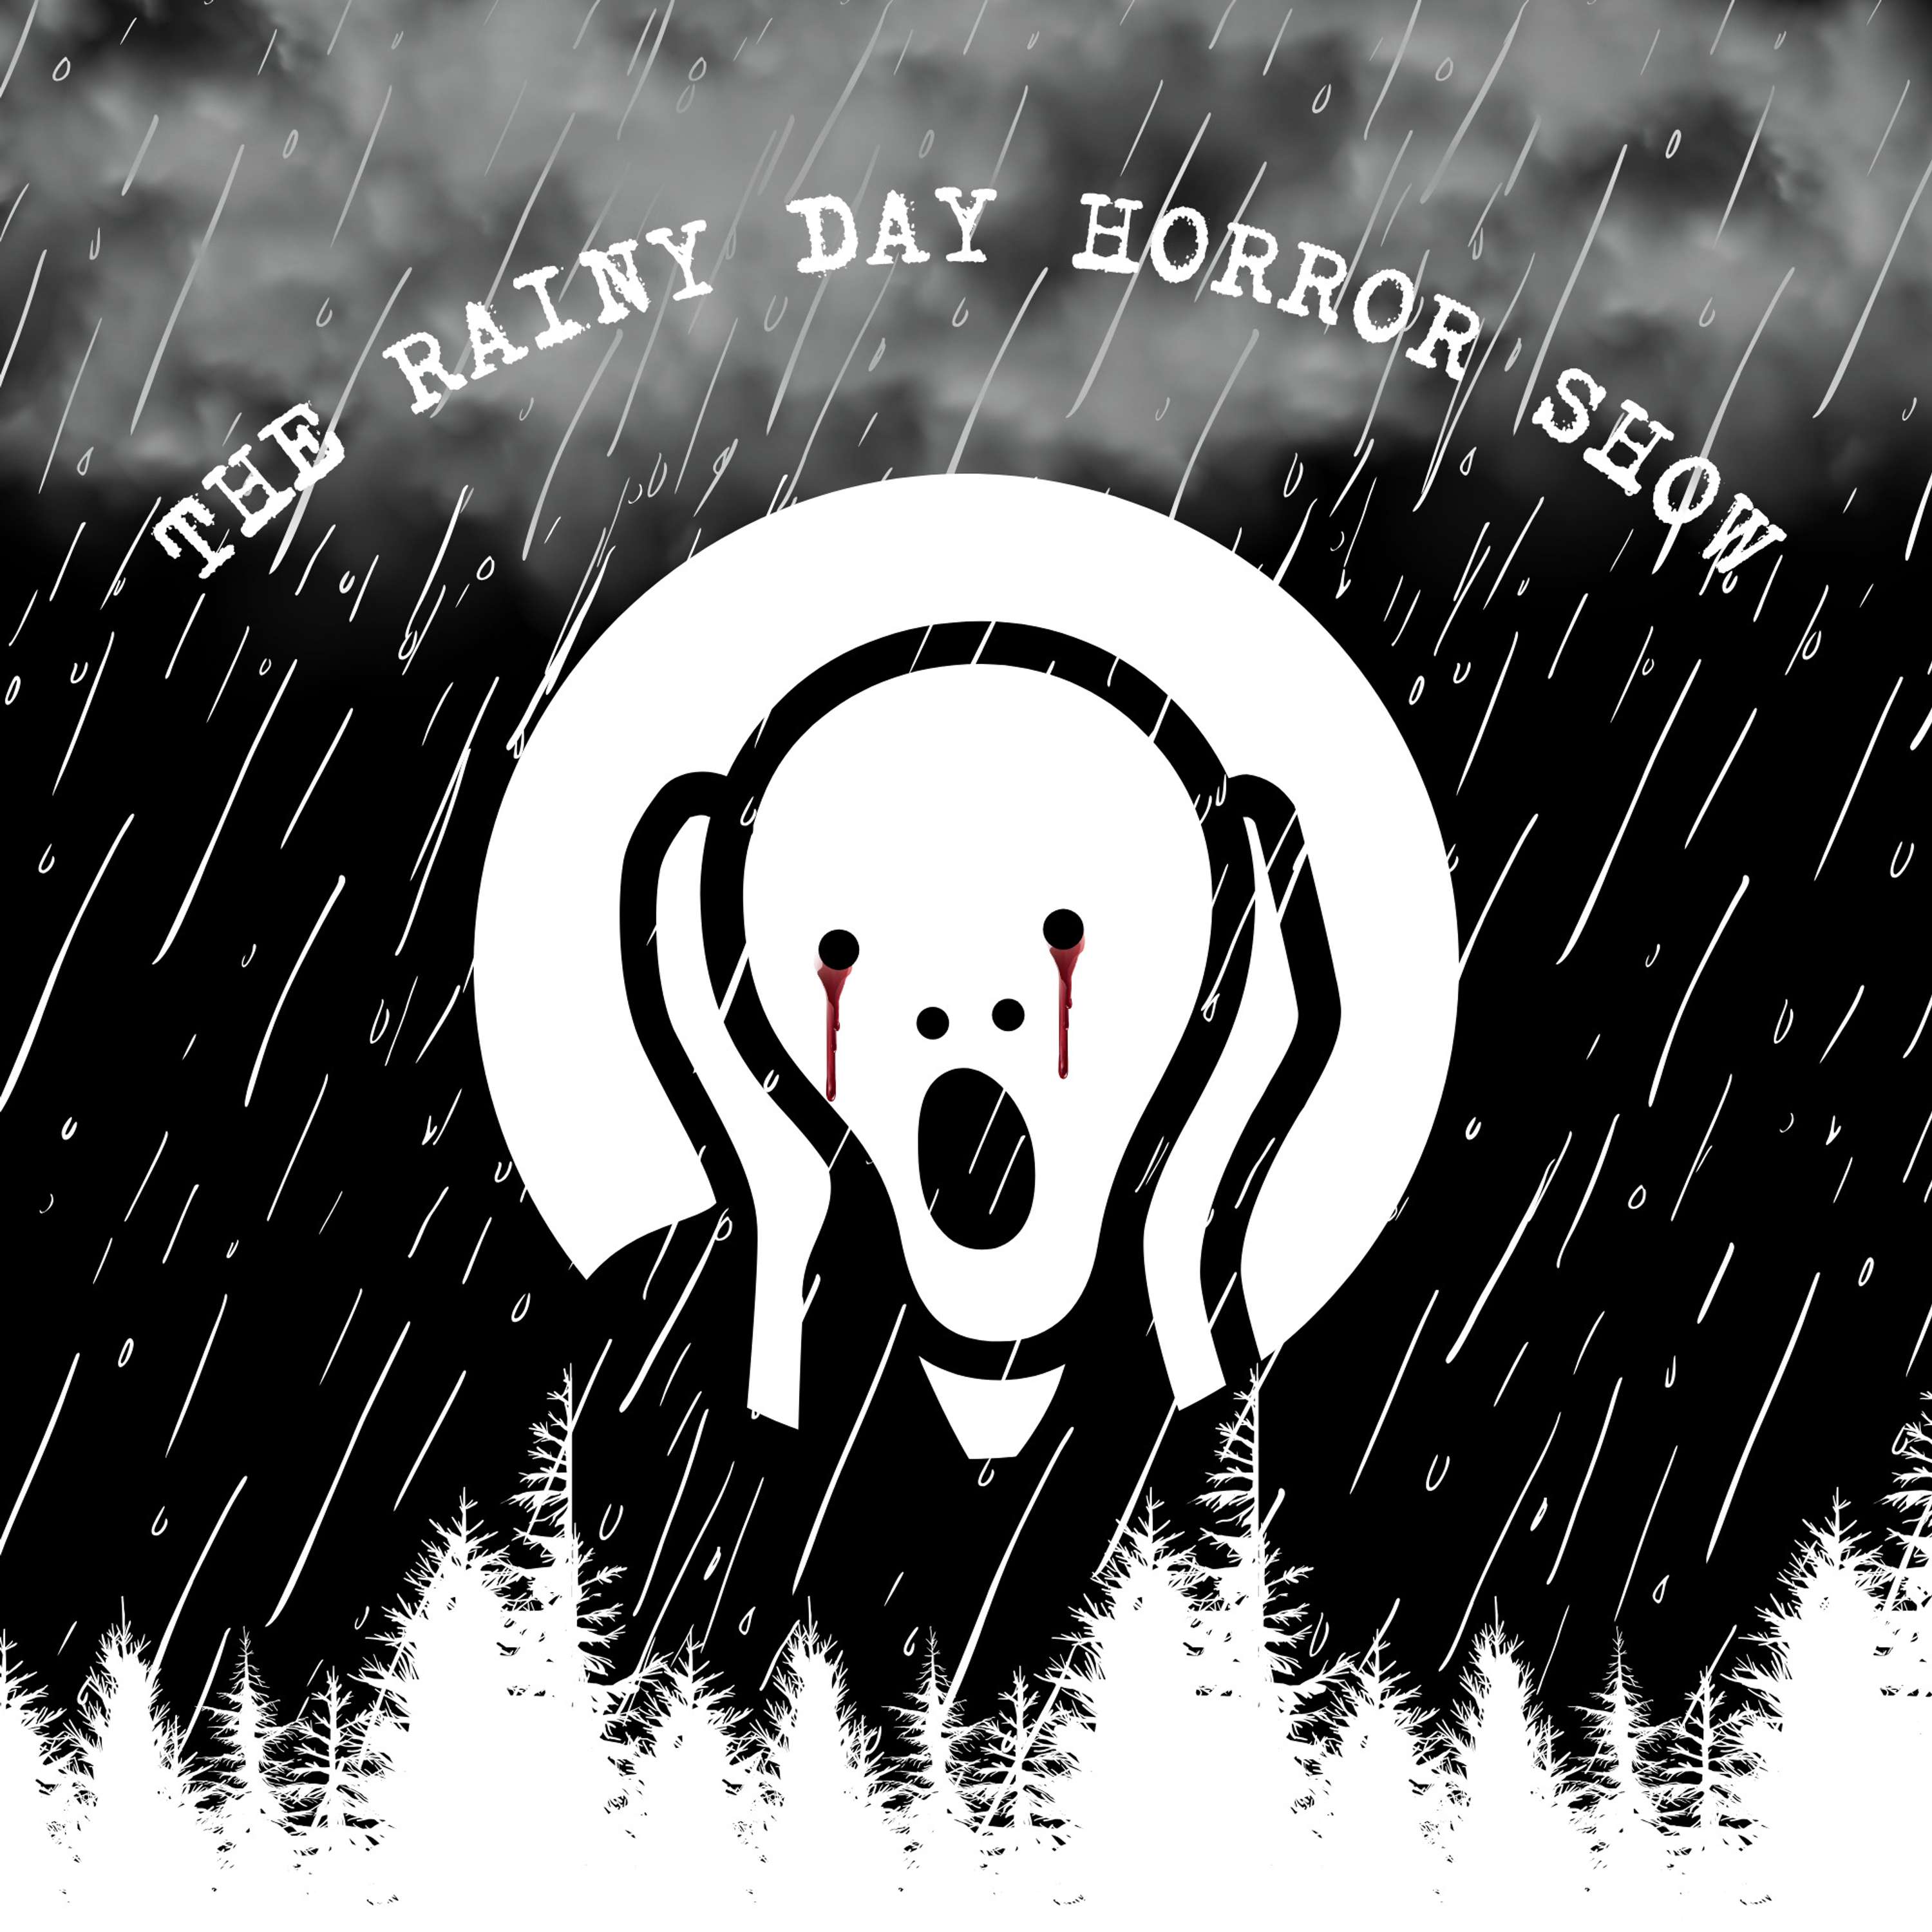 The Rainy Day Horror Show podcast show image